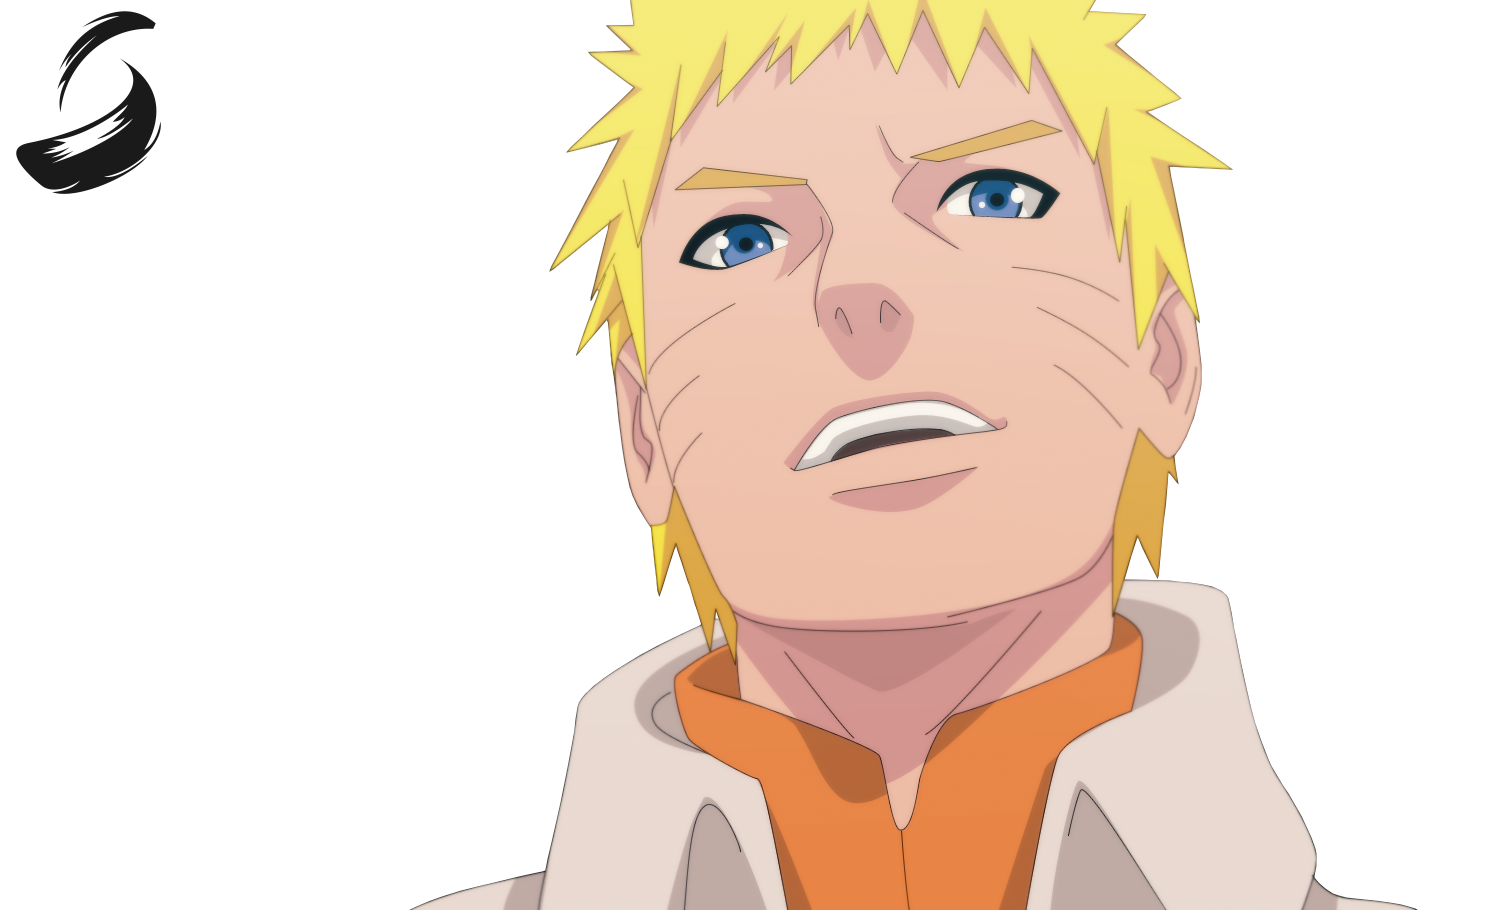 Naruto Hokage Render by Obedragon on DeviantArt